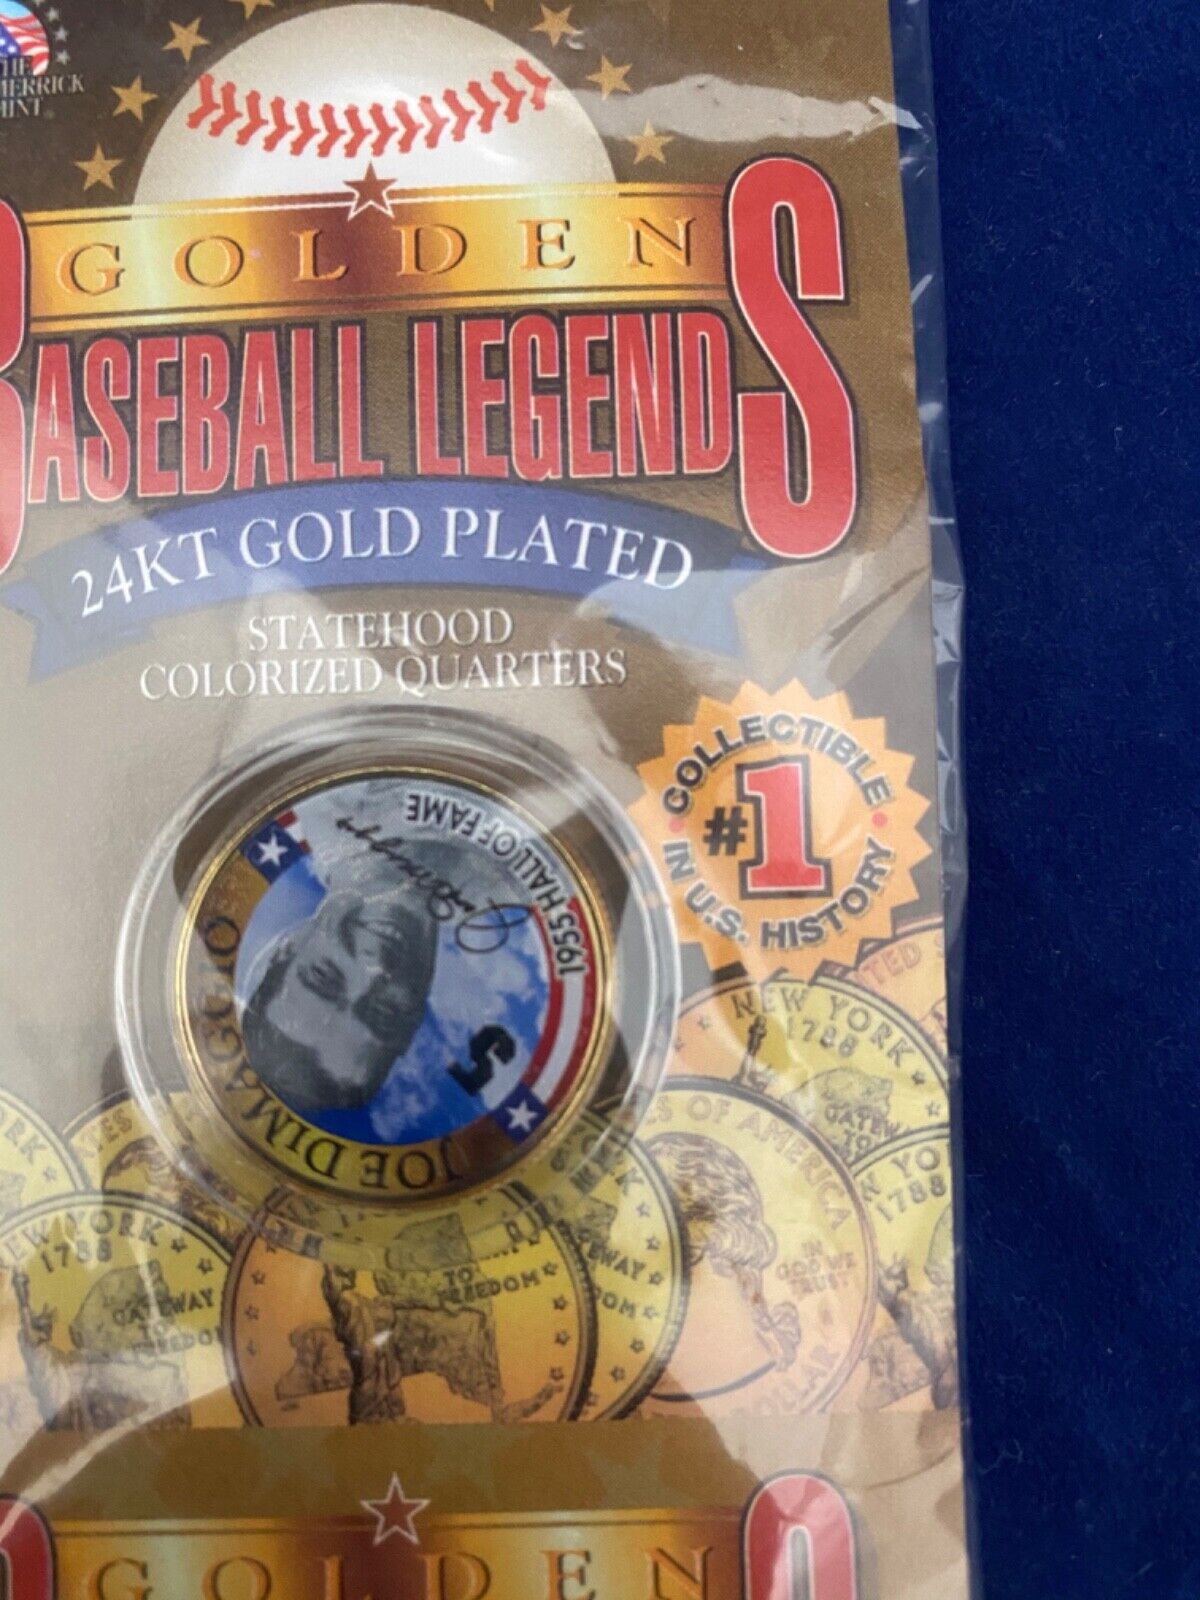 Golden Baseball Legends 24KT Gold Plated Colorized Quarter Joe DiMaggio